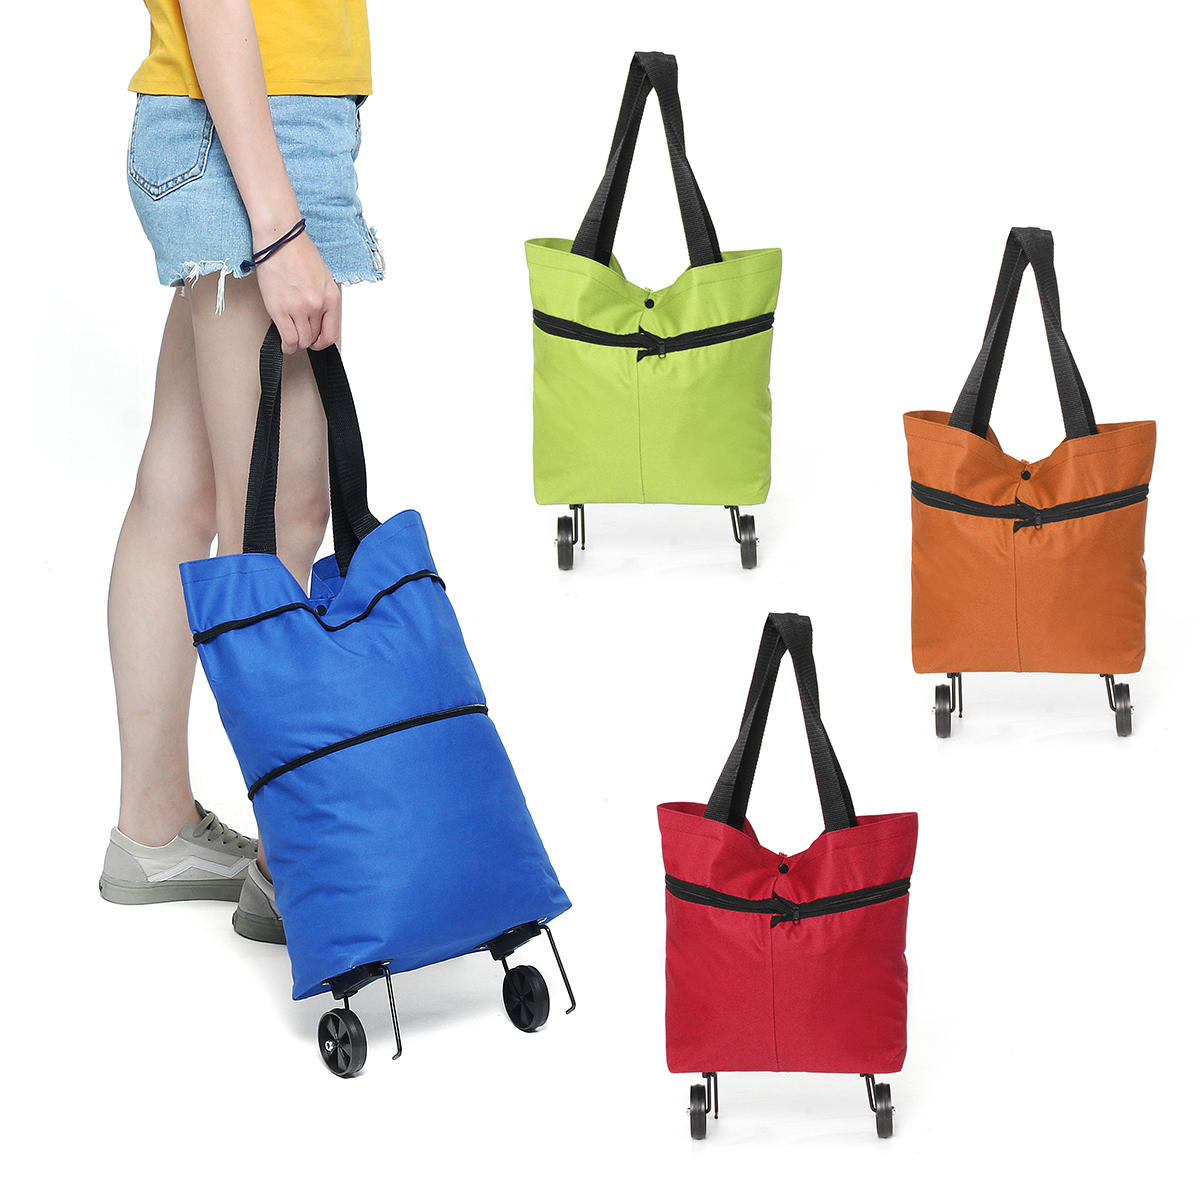 25L Portable Folding Shopping Trolley Cart Storage Bag Wheel Luggage Basket Outdoor Travel